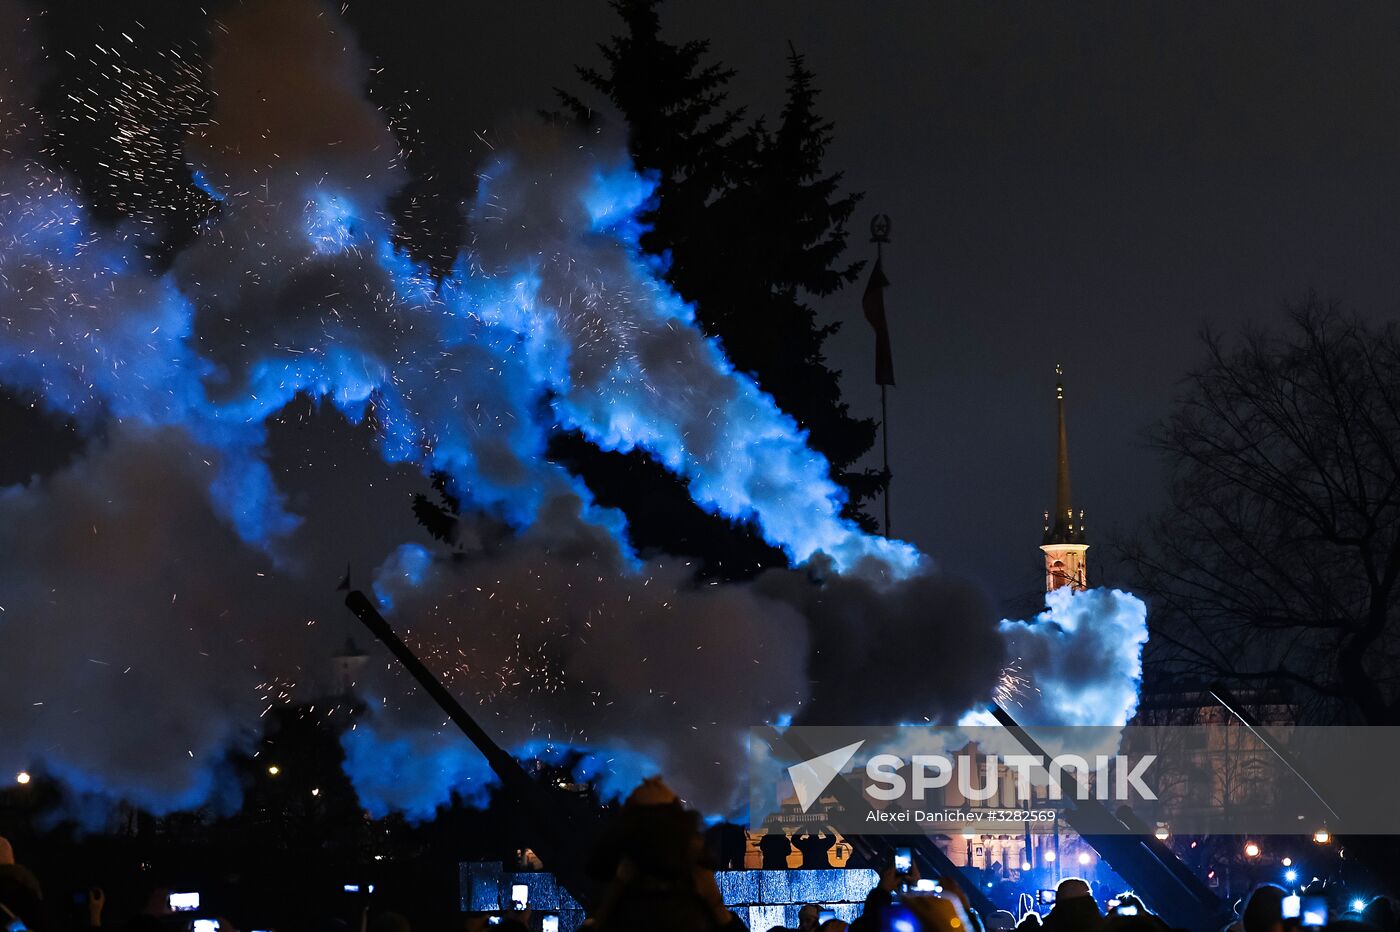 Fireworks in honor of breaking Siege of Leningrad